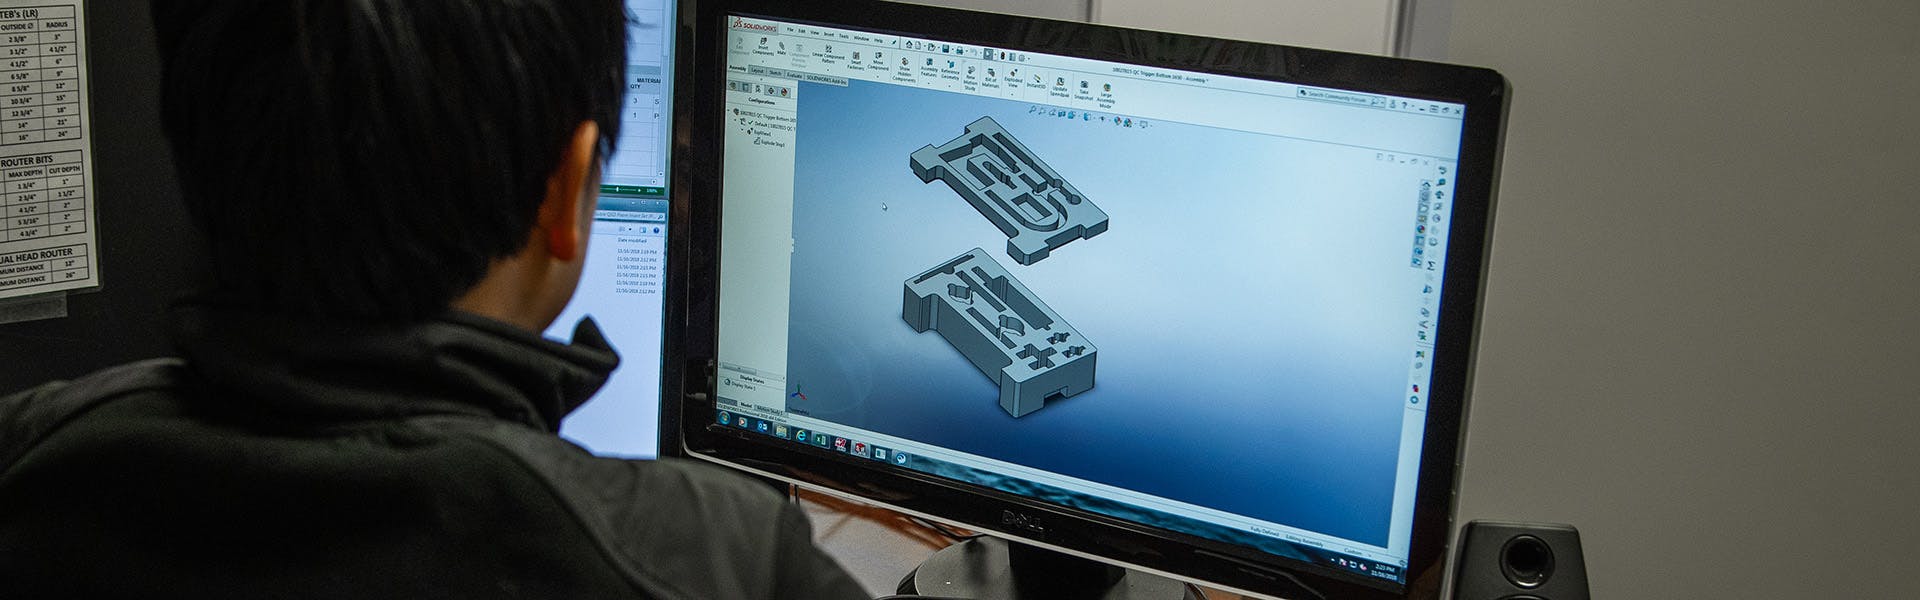 article image foam fabrication case inserts prototype computer